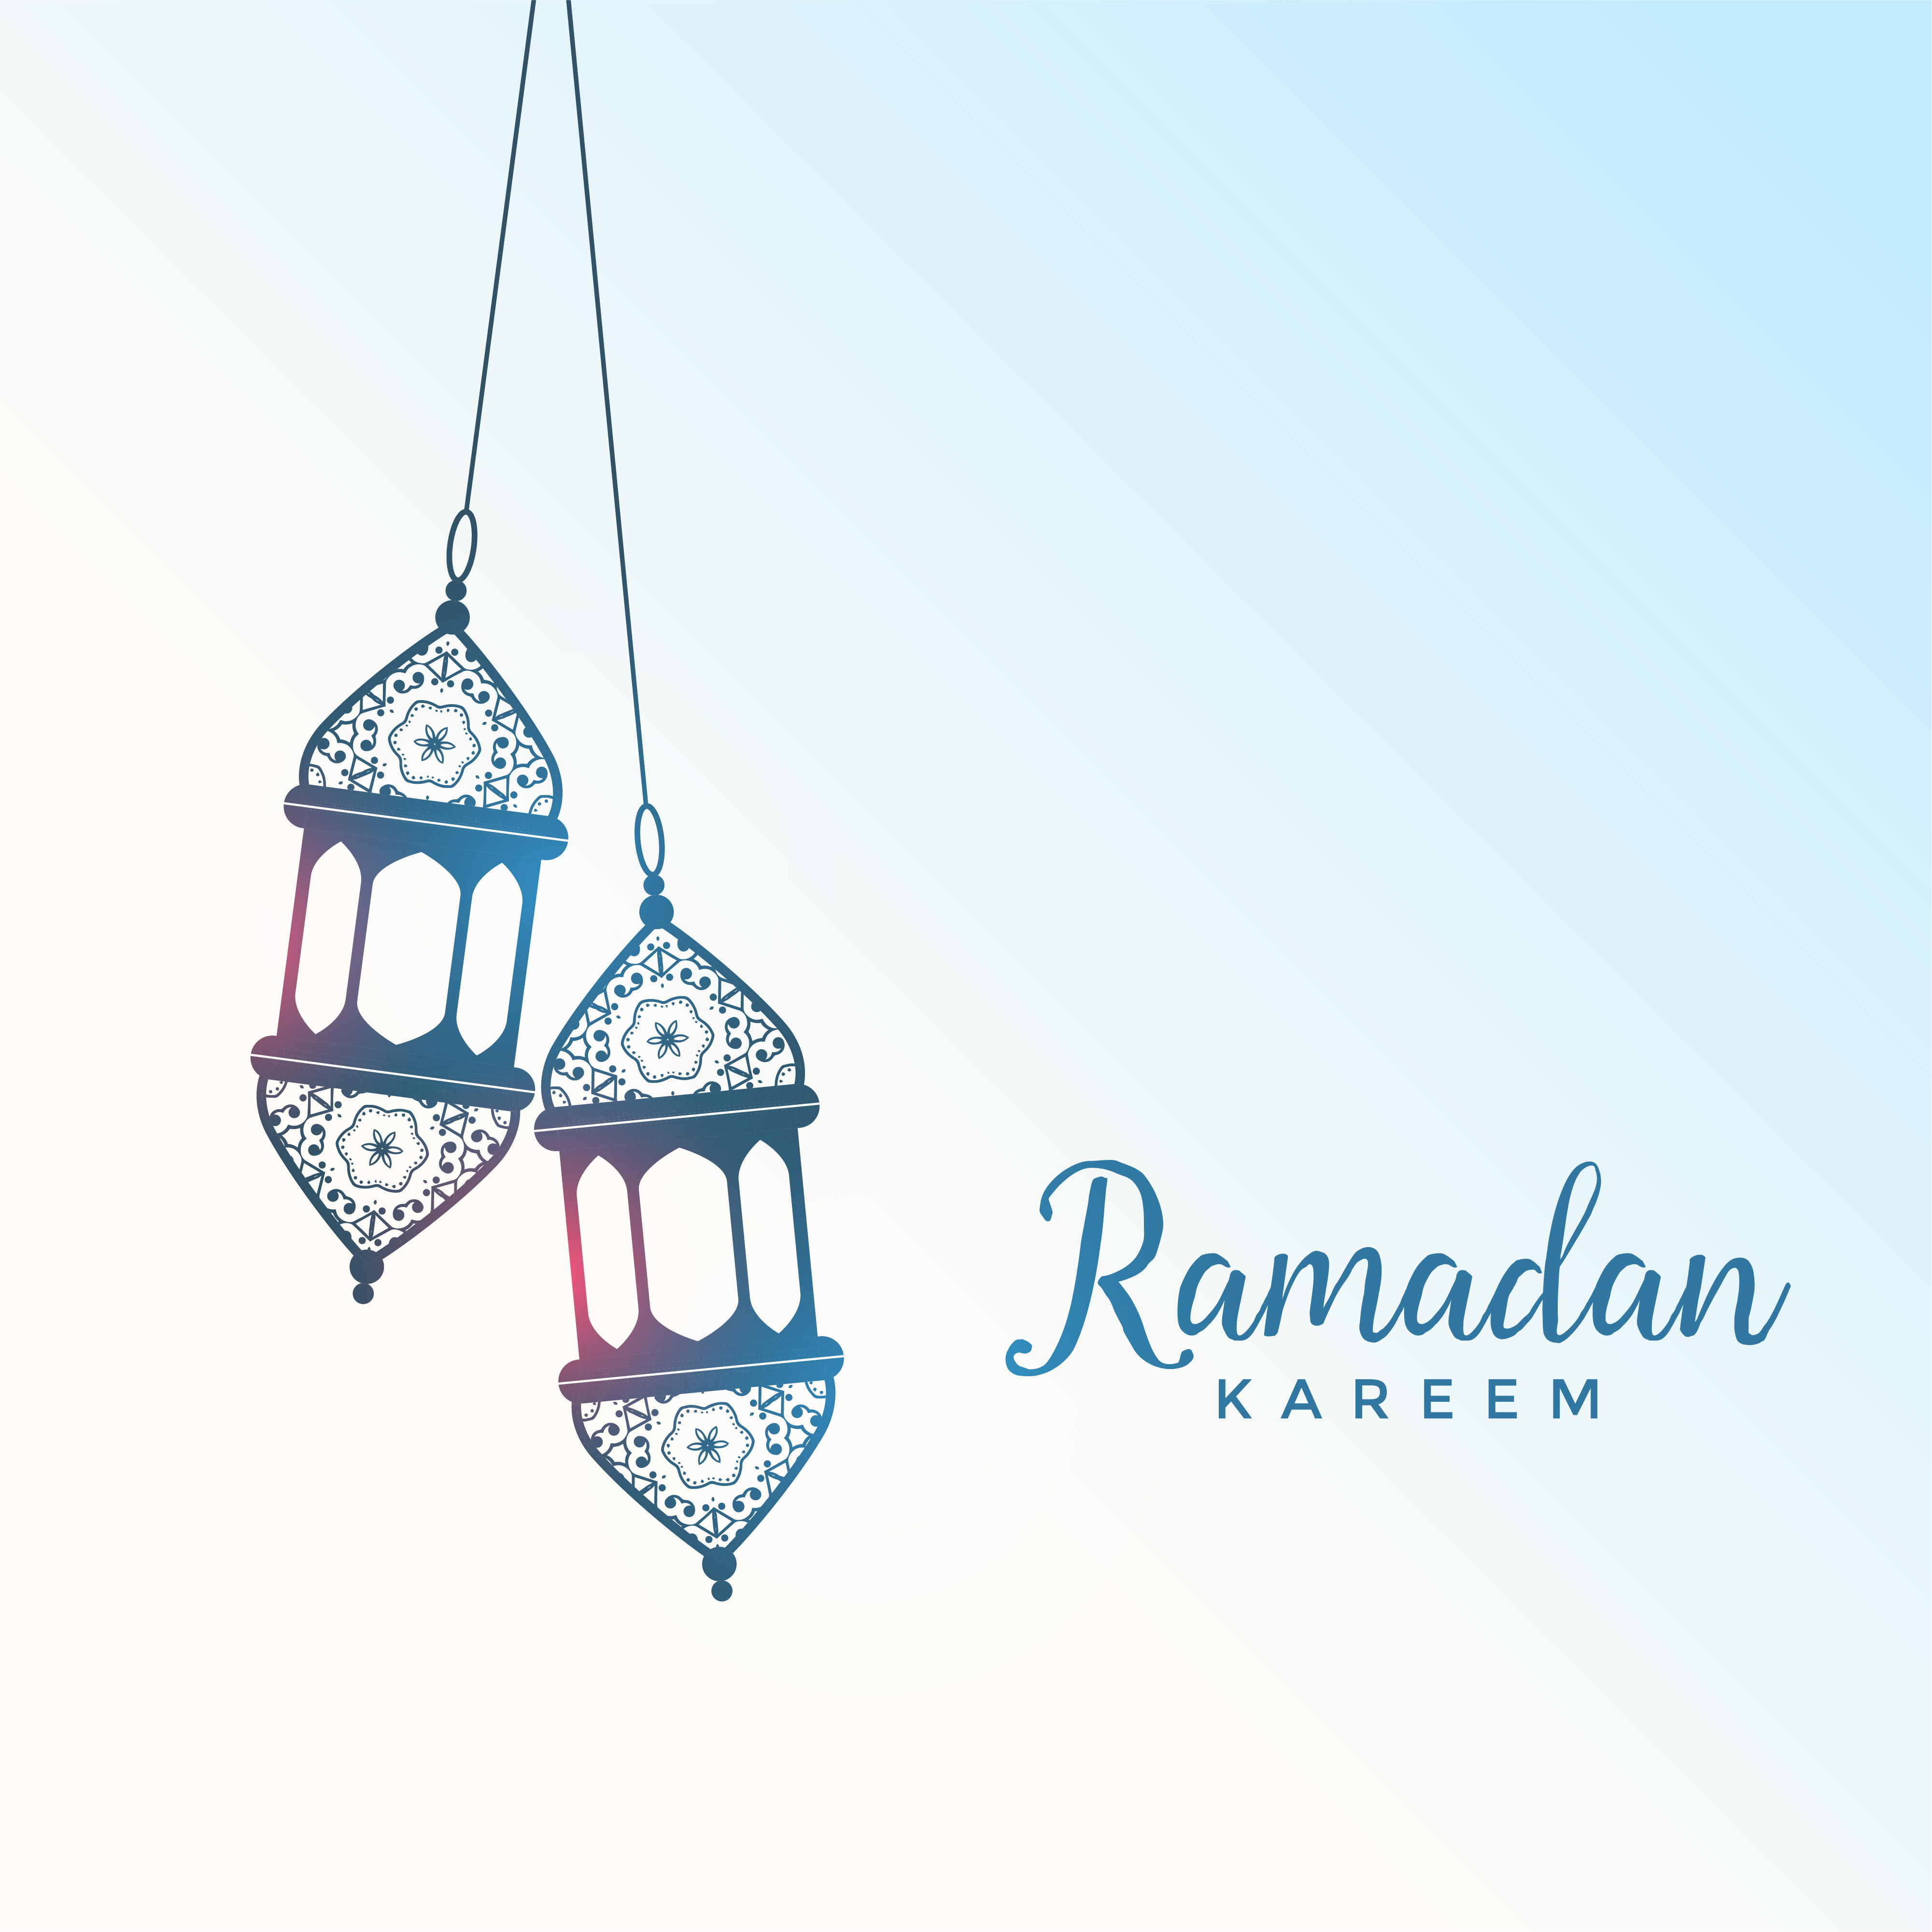 Ramadan Kareem Free Vector Art - (2989 Free Downloads)